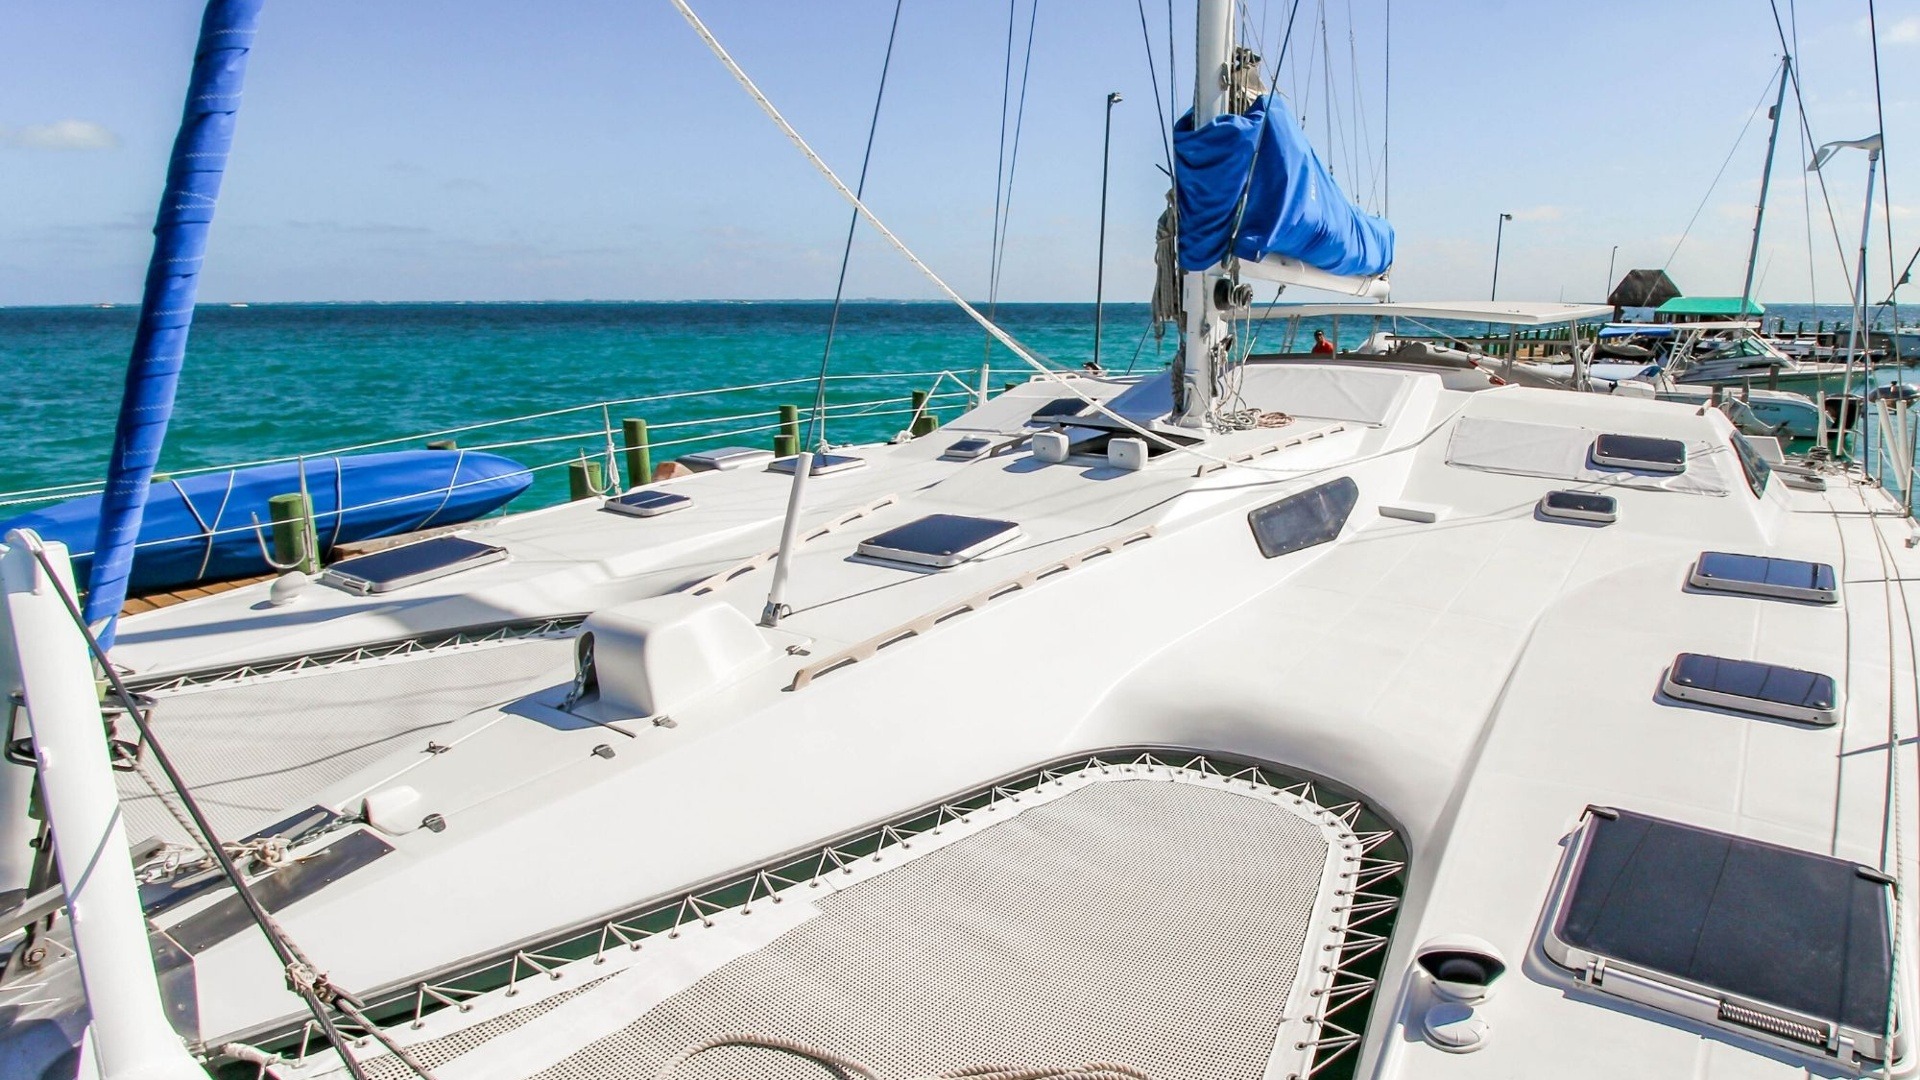 4 - LowRes - Max - Private tour to Isla Mujeres in catamaran - Cancun Sailing